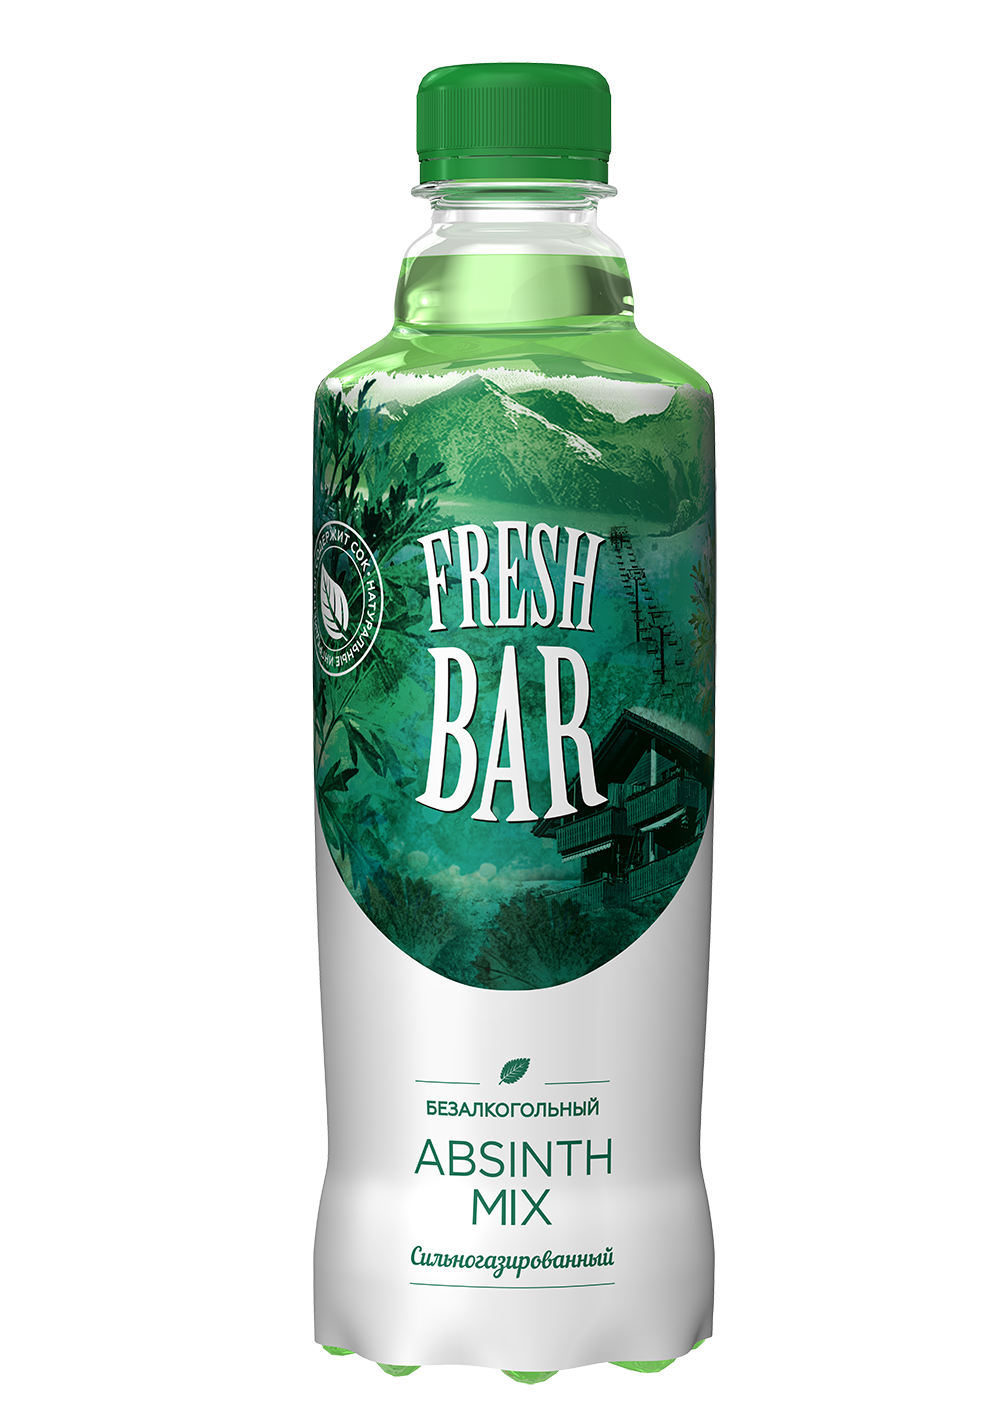 Что такое фреш бар. Fresh Bar Absinth Mix. Фреш бар вкусы. Absinthe Mix Фреш бар. 2 Литровый Фреш бар.